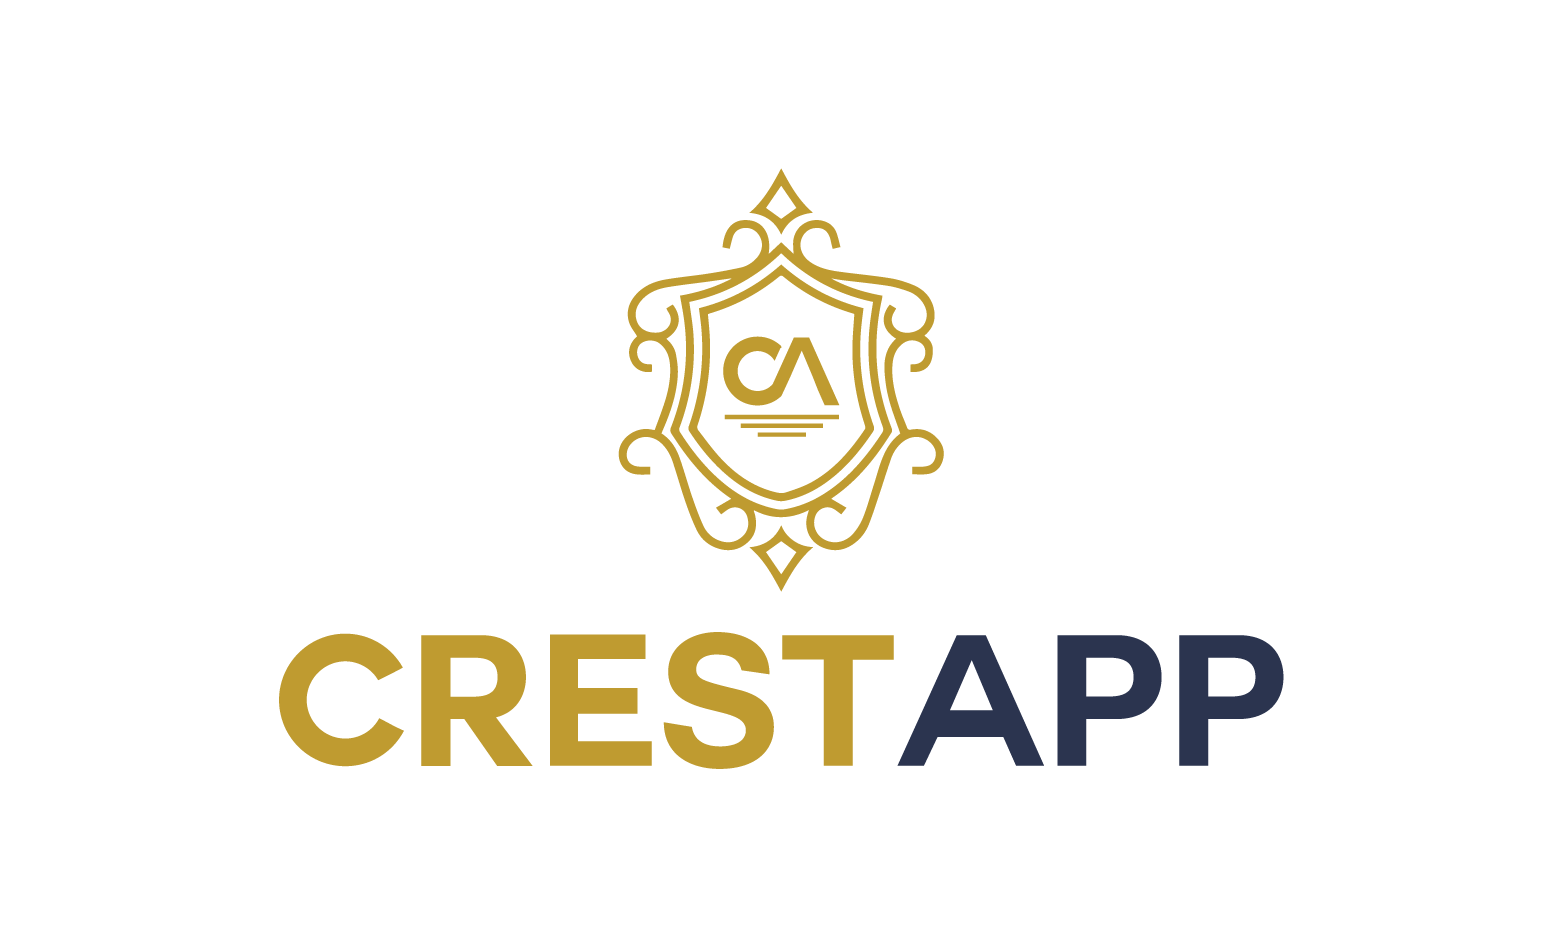 CrestApp.com - Creative brandable domain for sale